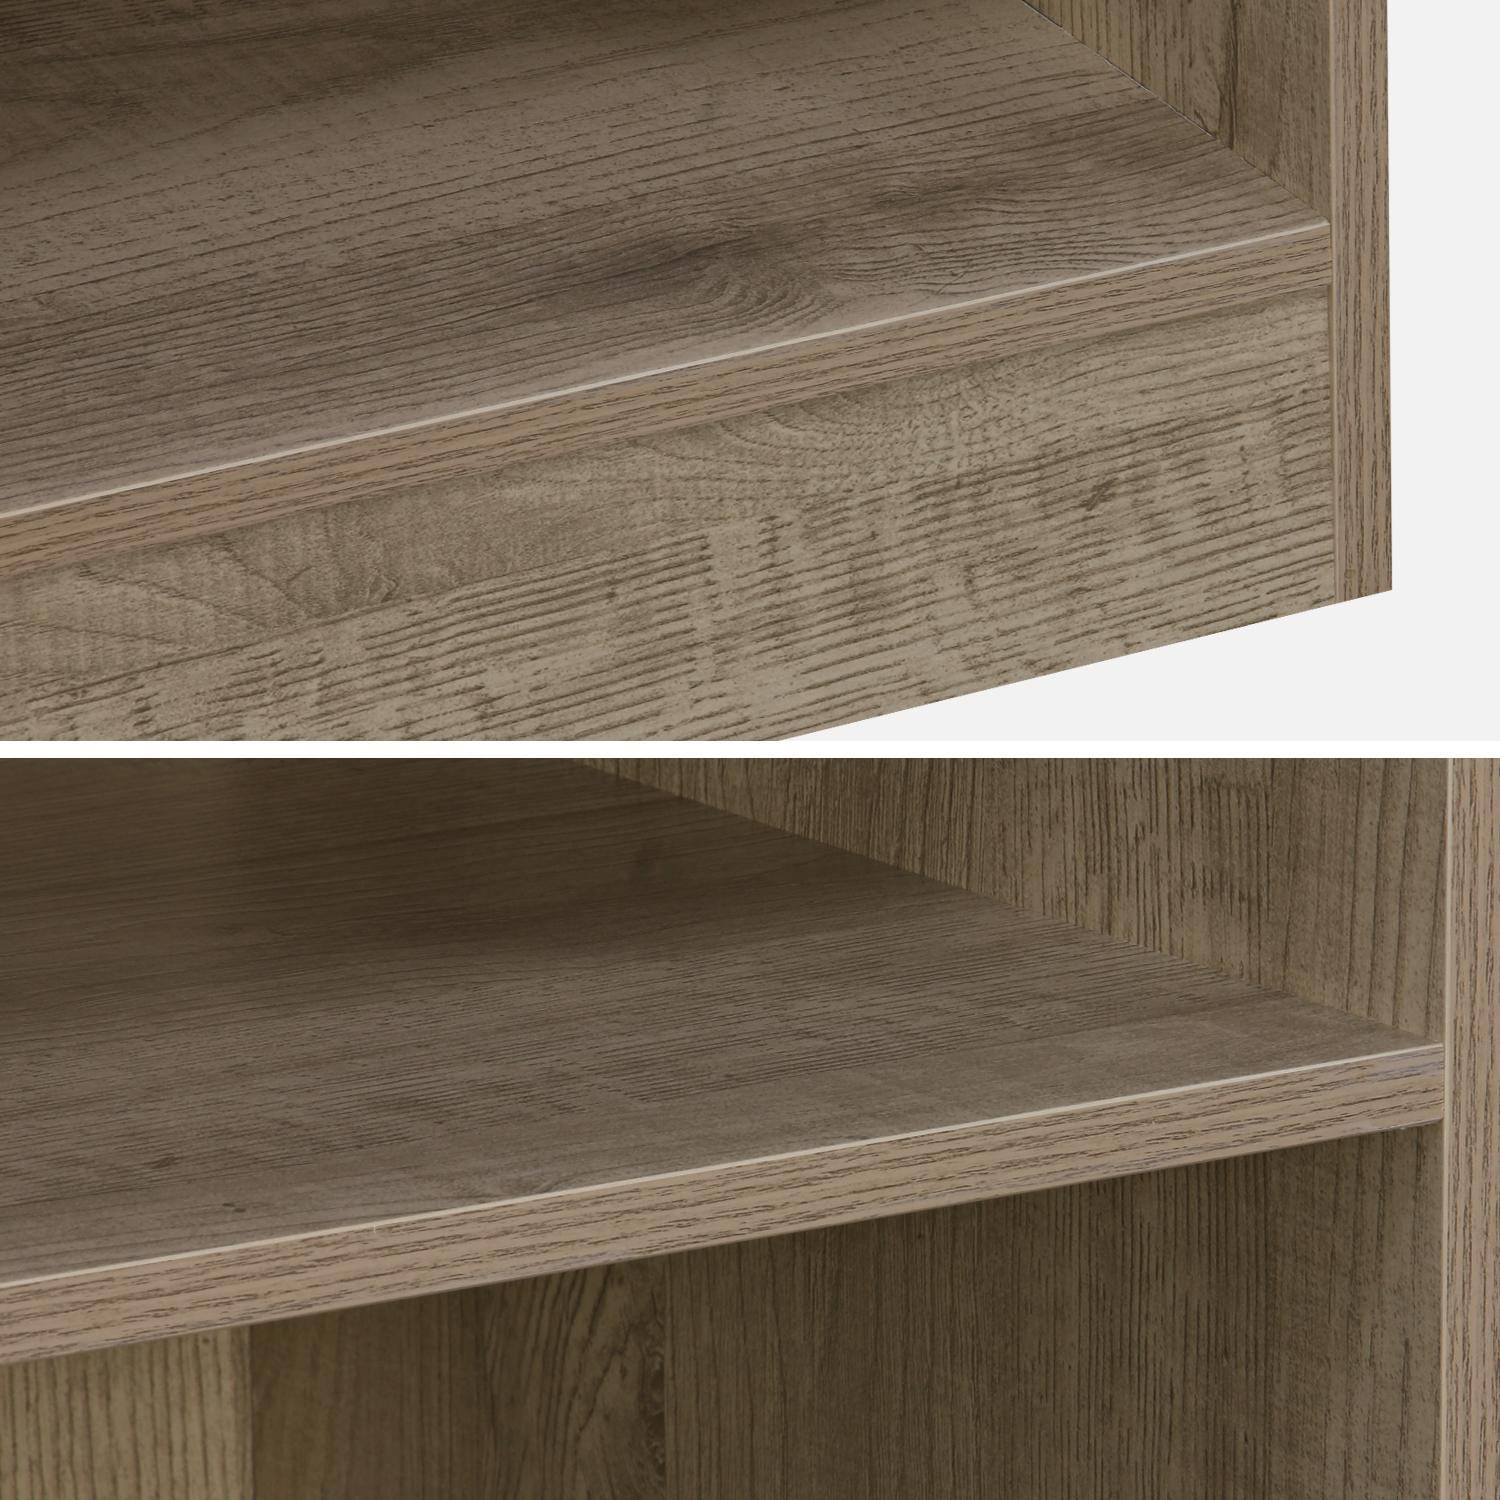 Modular open wardrobe shelf unit, 60x45x180cm, Modulo, 5 shelves, Natural,sweeek,Photo6